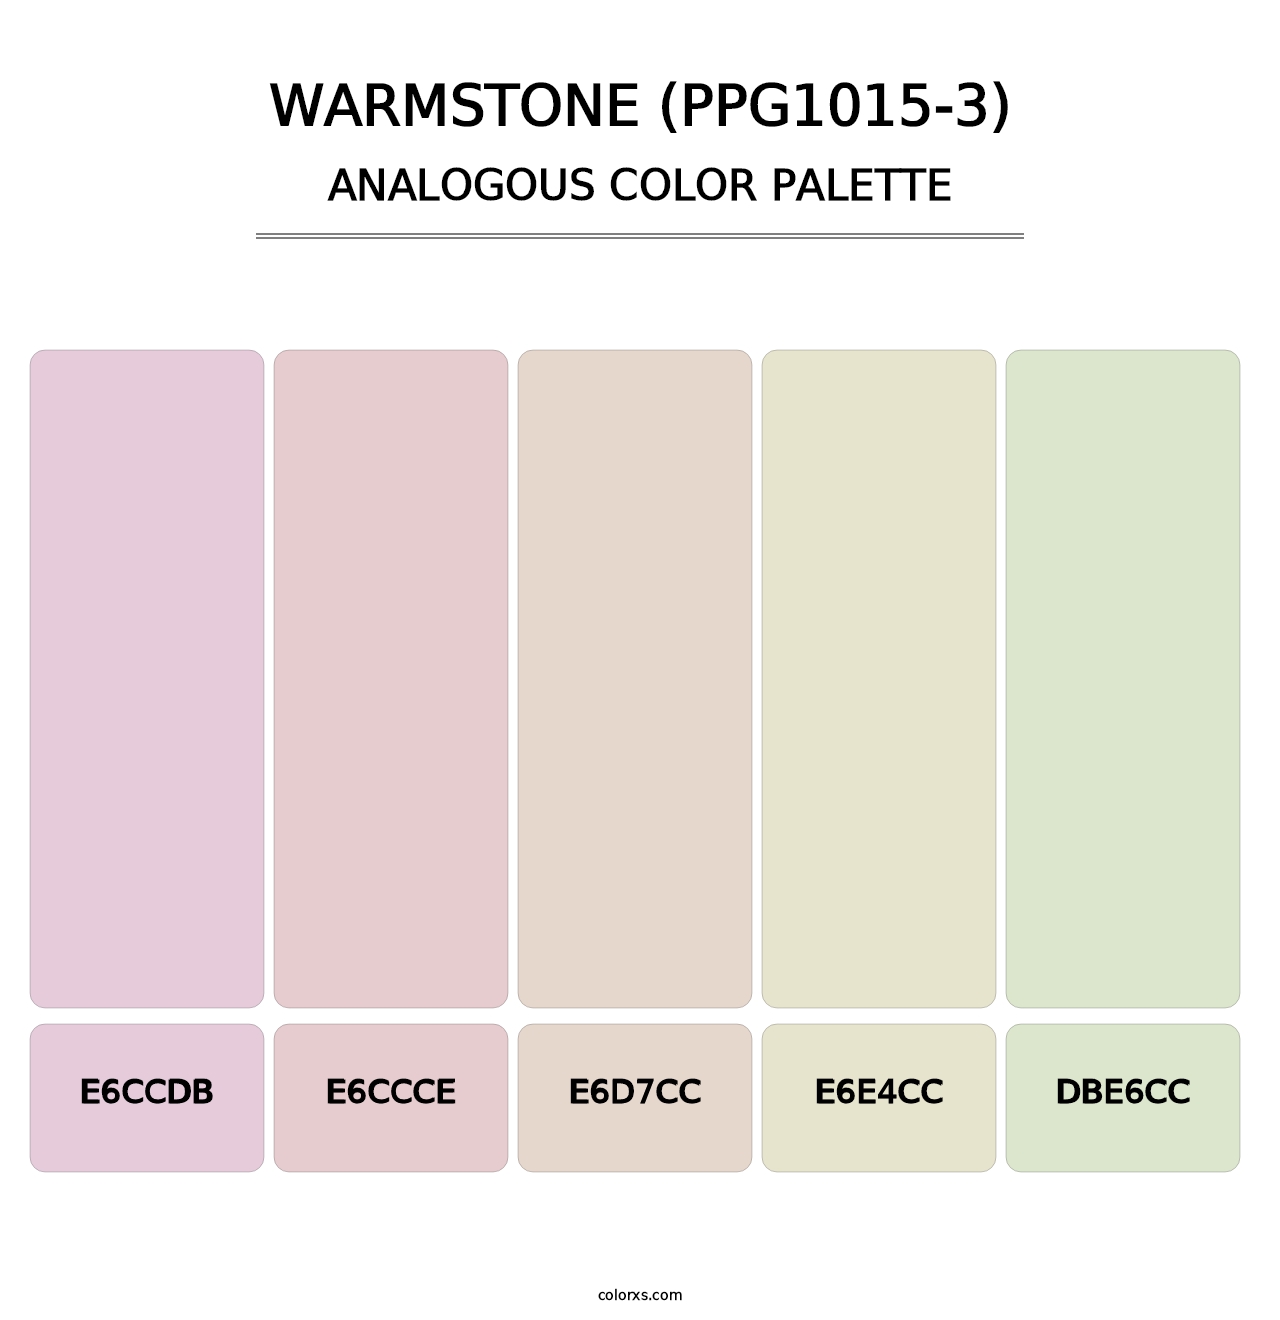 Warmstone (PPG1015-3) - Analogous Color Palette